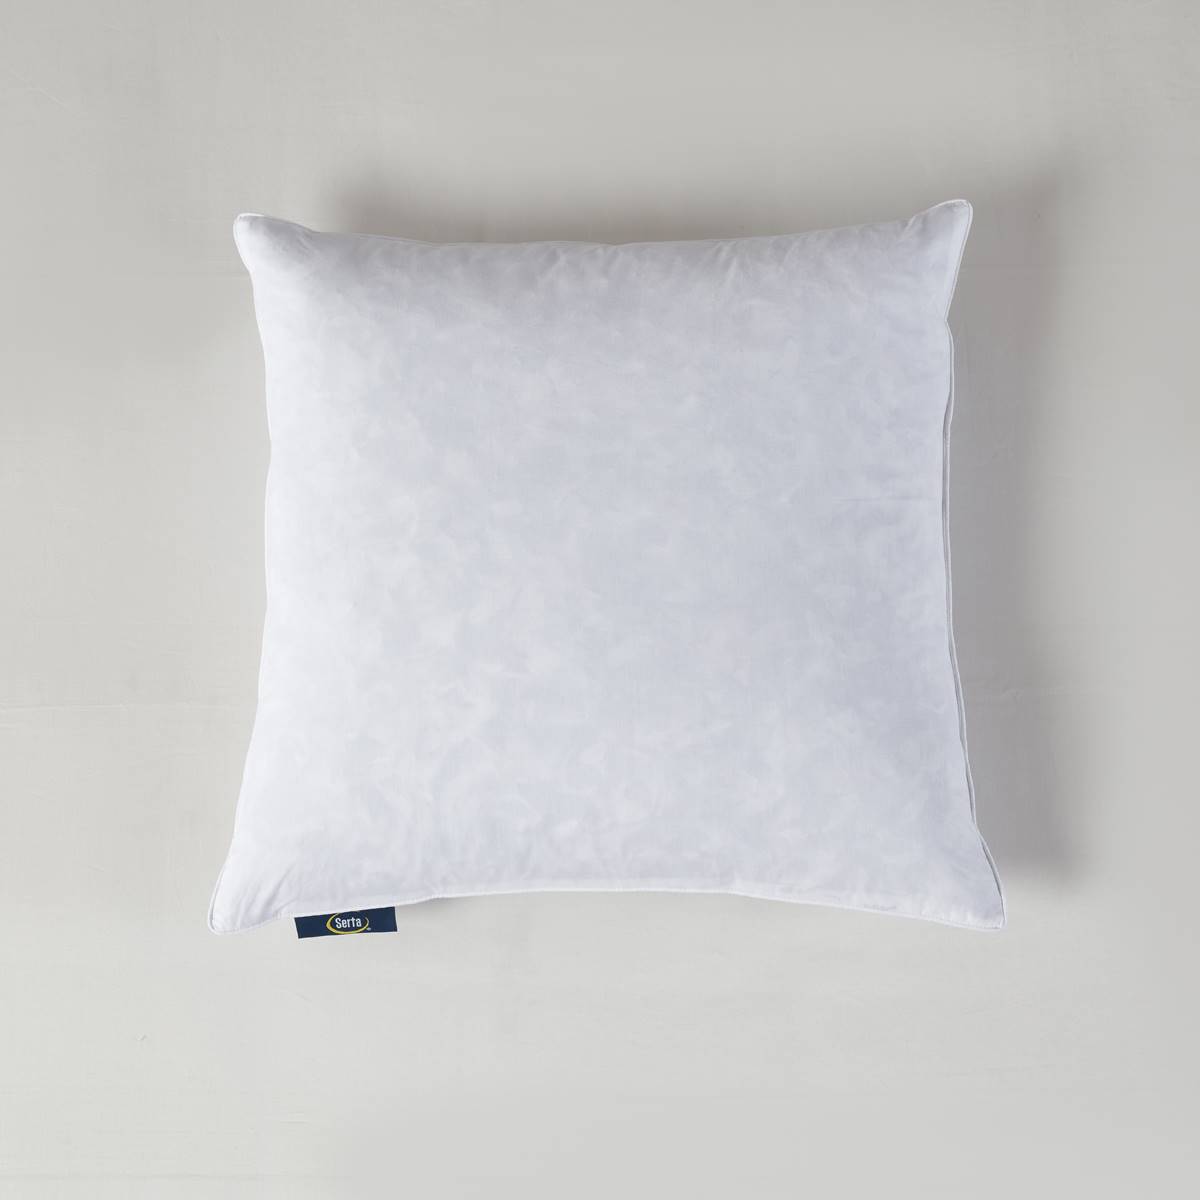 Serta(R) Medium Firm 233TC 2pk. Decorative Feather Pillow